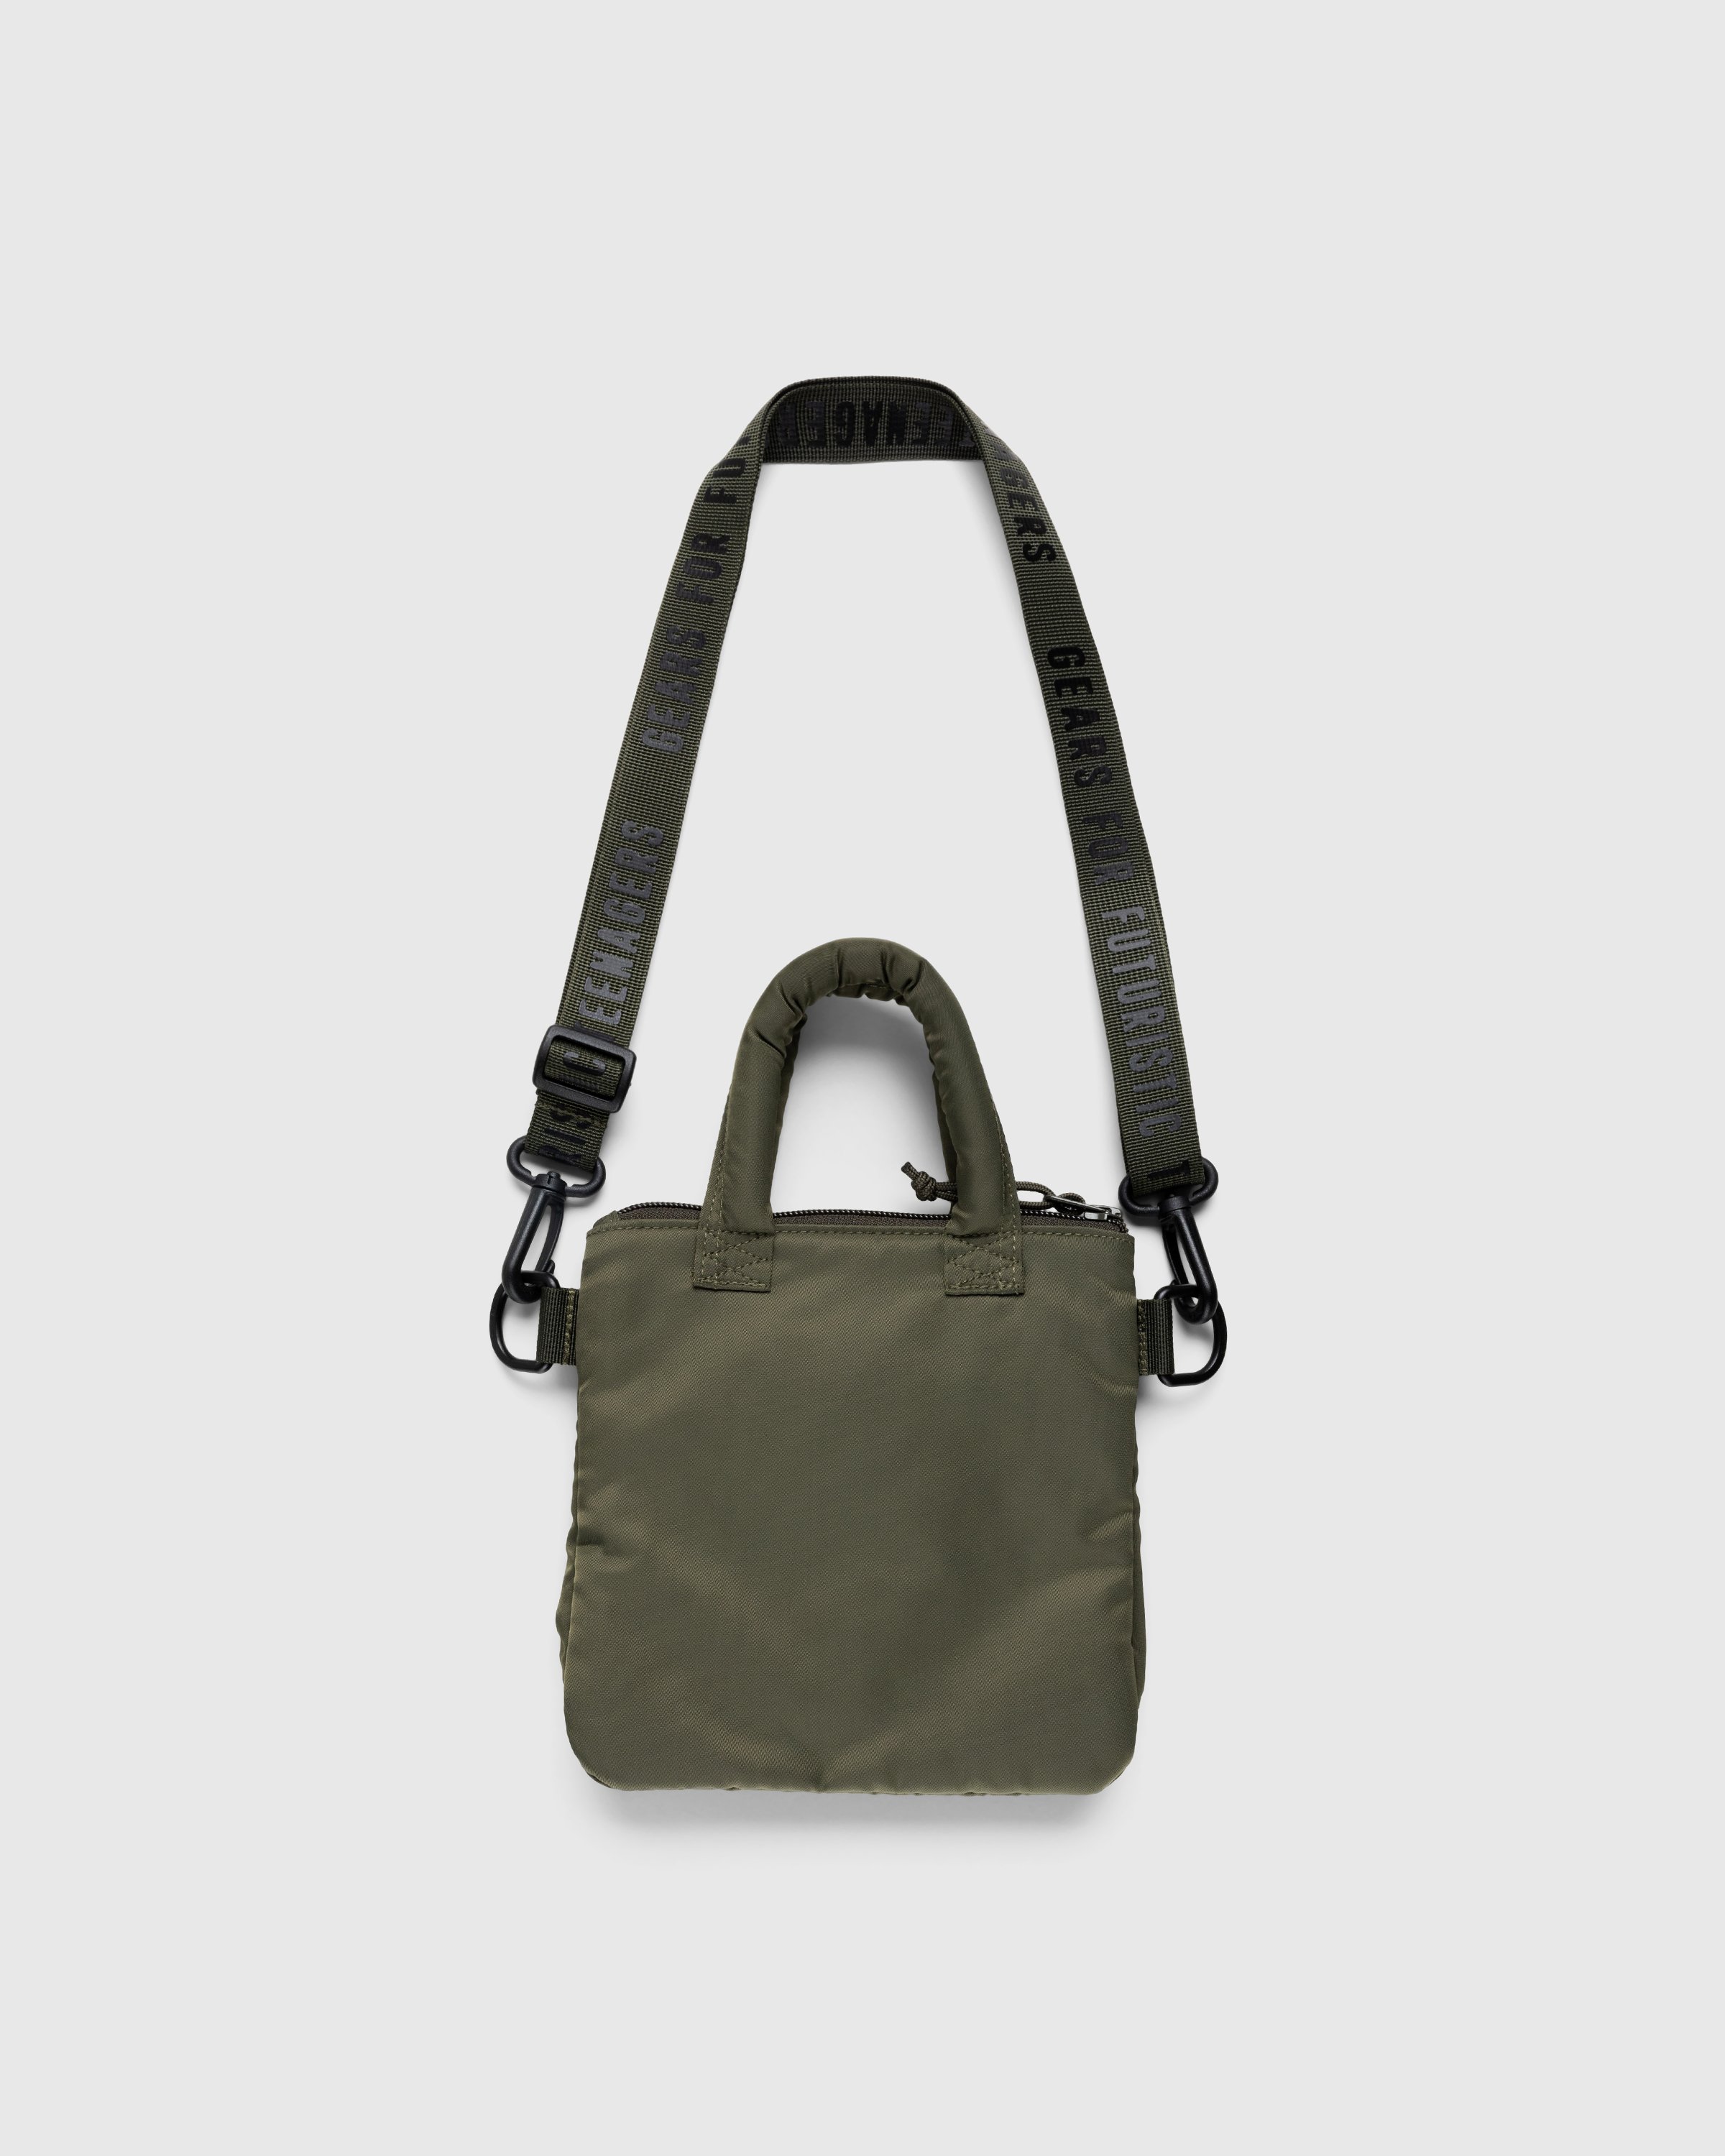 Human Made - MINI HELMET BAG Olive Drab - Accessories - Green - Image 2